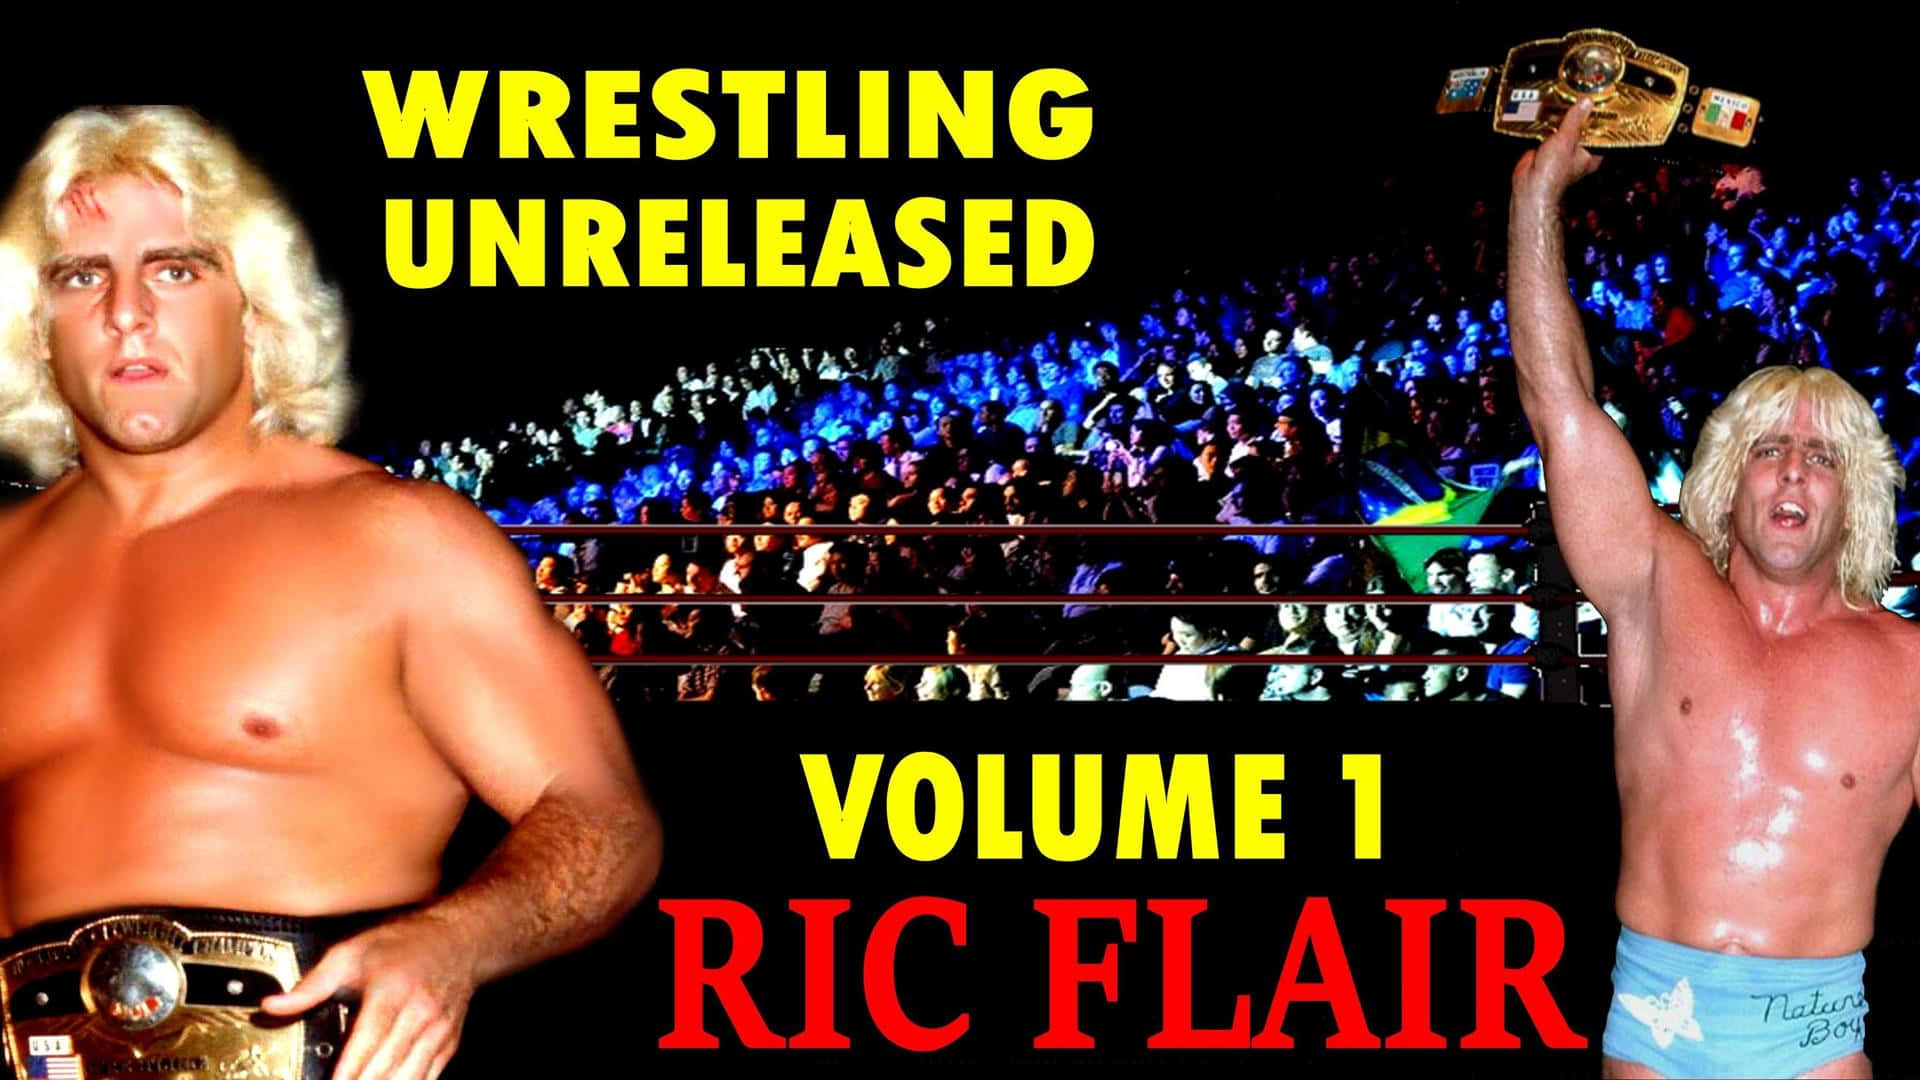 Ric Flair In His Signature Wrestling Pose